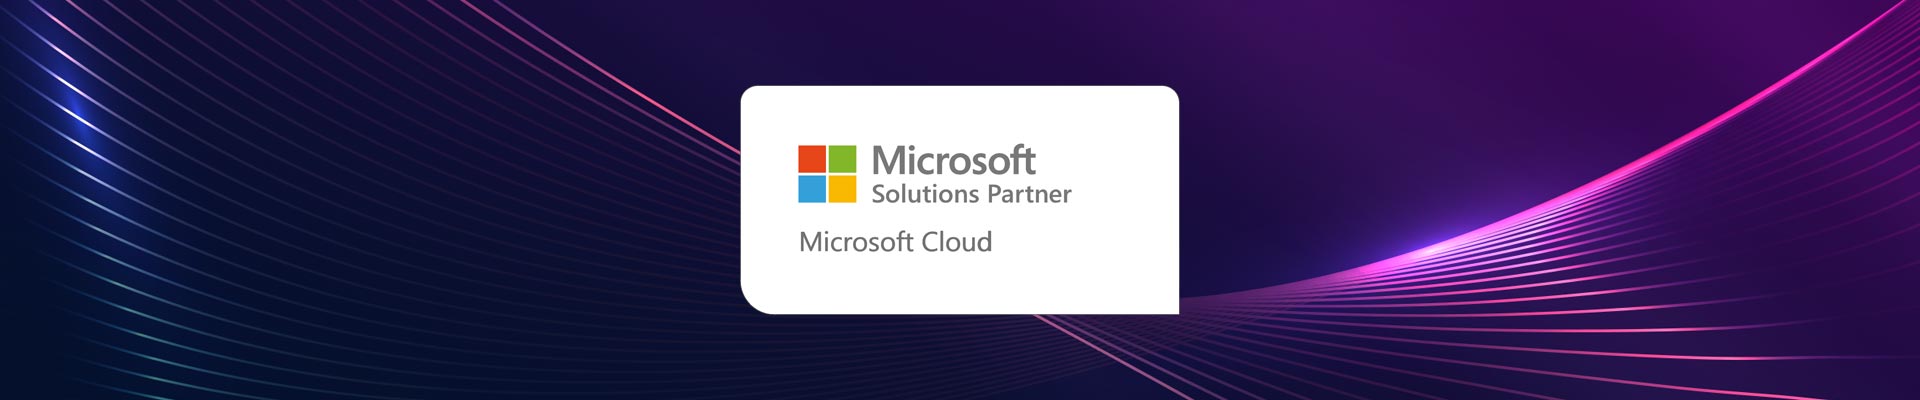 Phoenix achieves Solutions Partner for Microsoft Cloud status